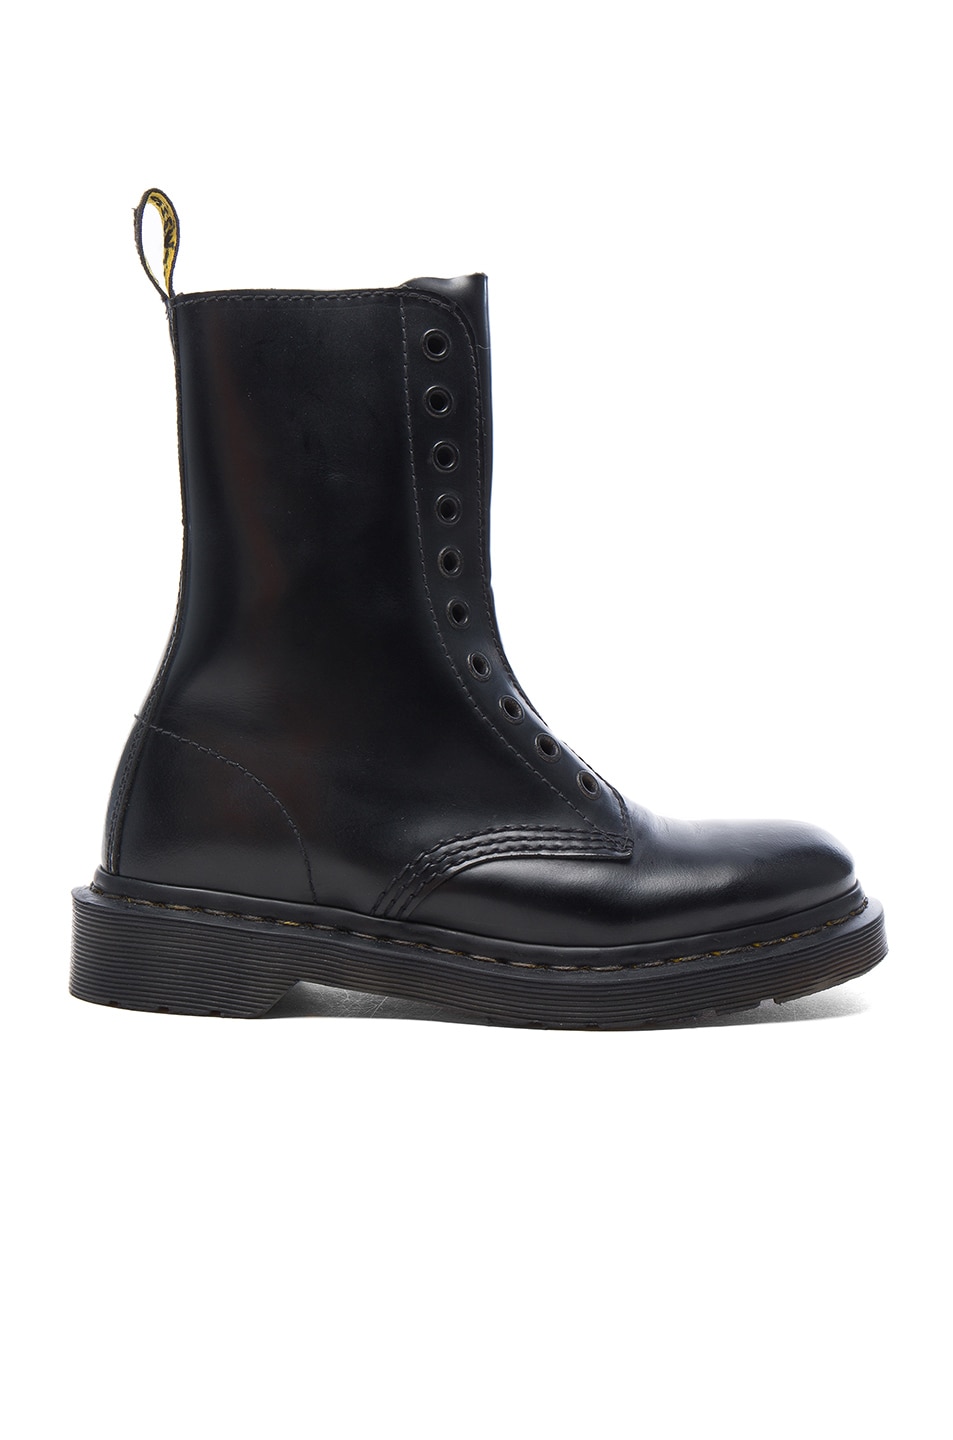 Image 1 of VETEMENTS x Dr. Martens Leather Borderline Boots in Black